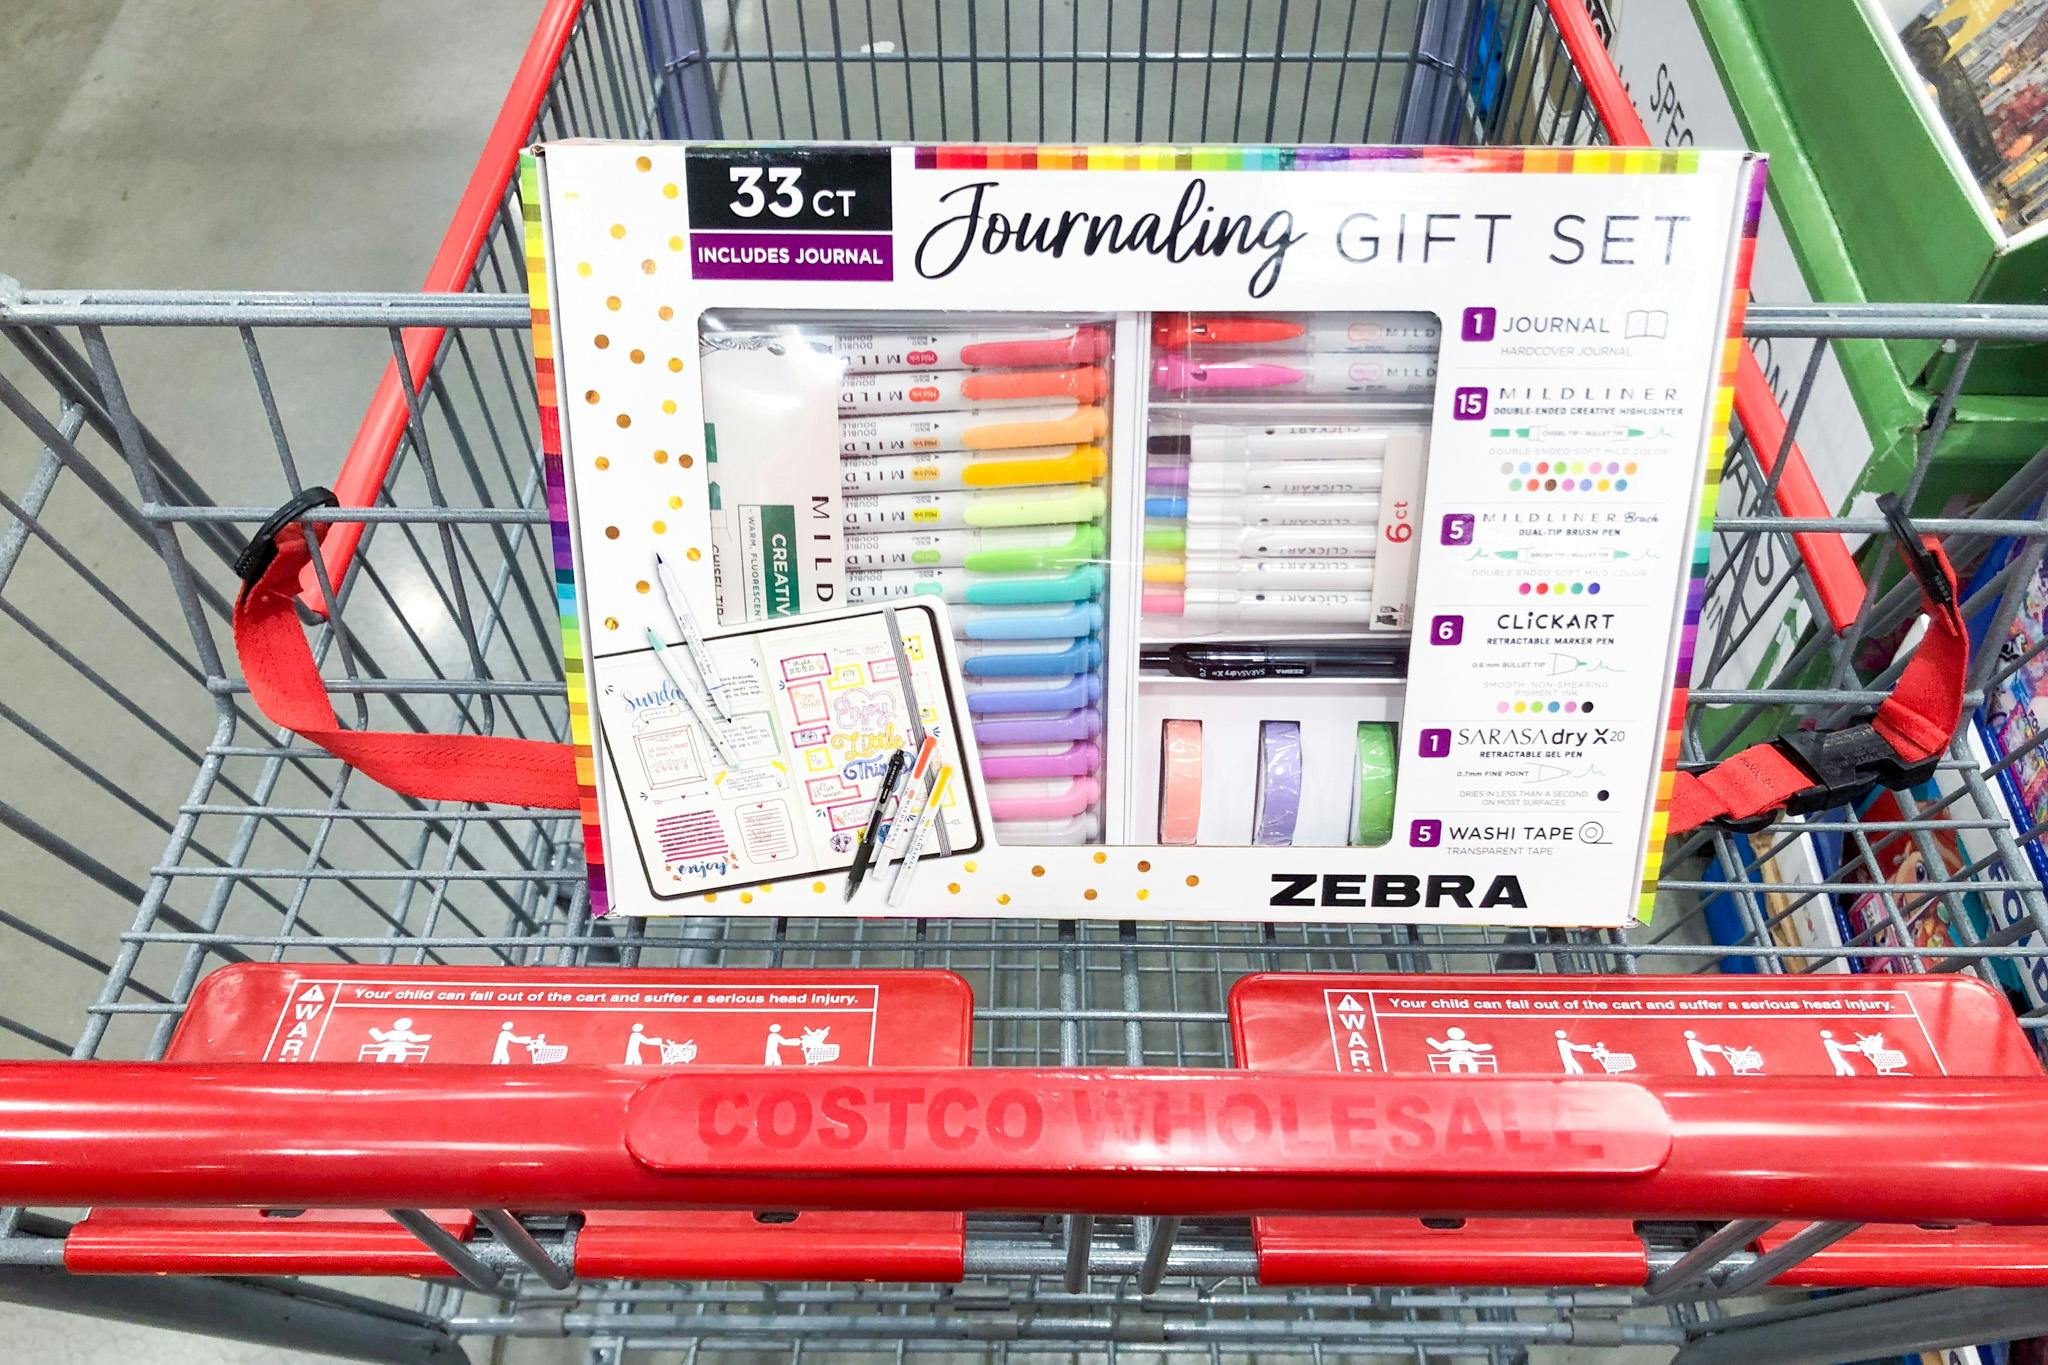 Zebra 33-Piece Journaling Gift Set, Just $23.99 at Costco (Reg